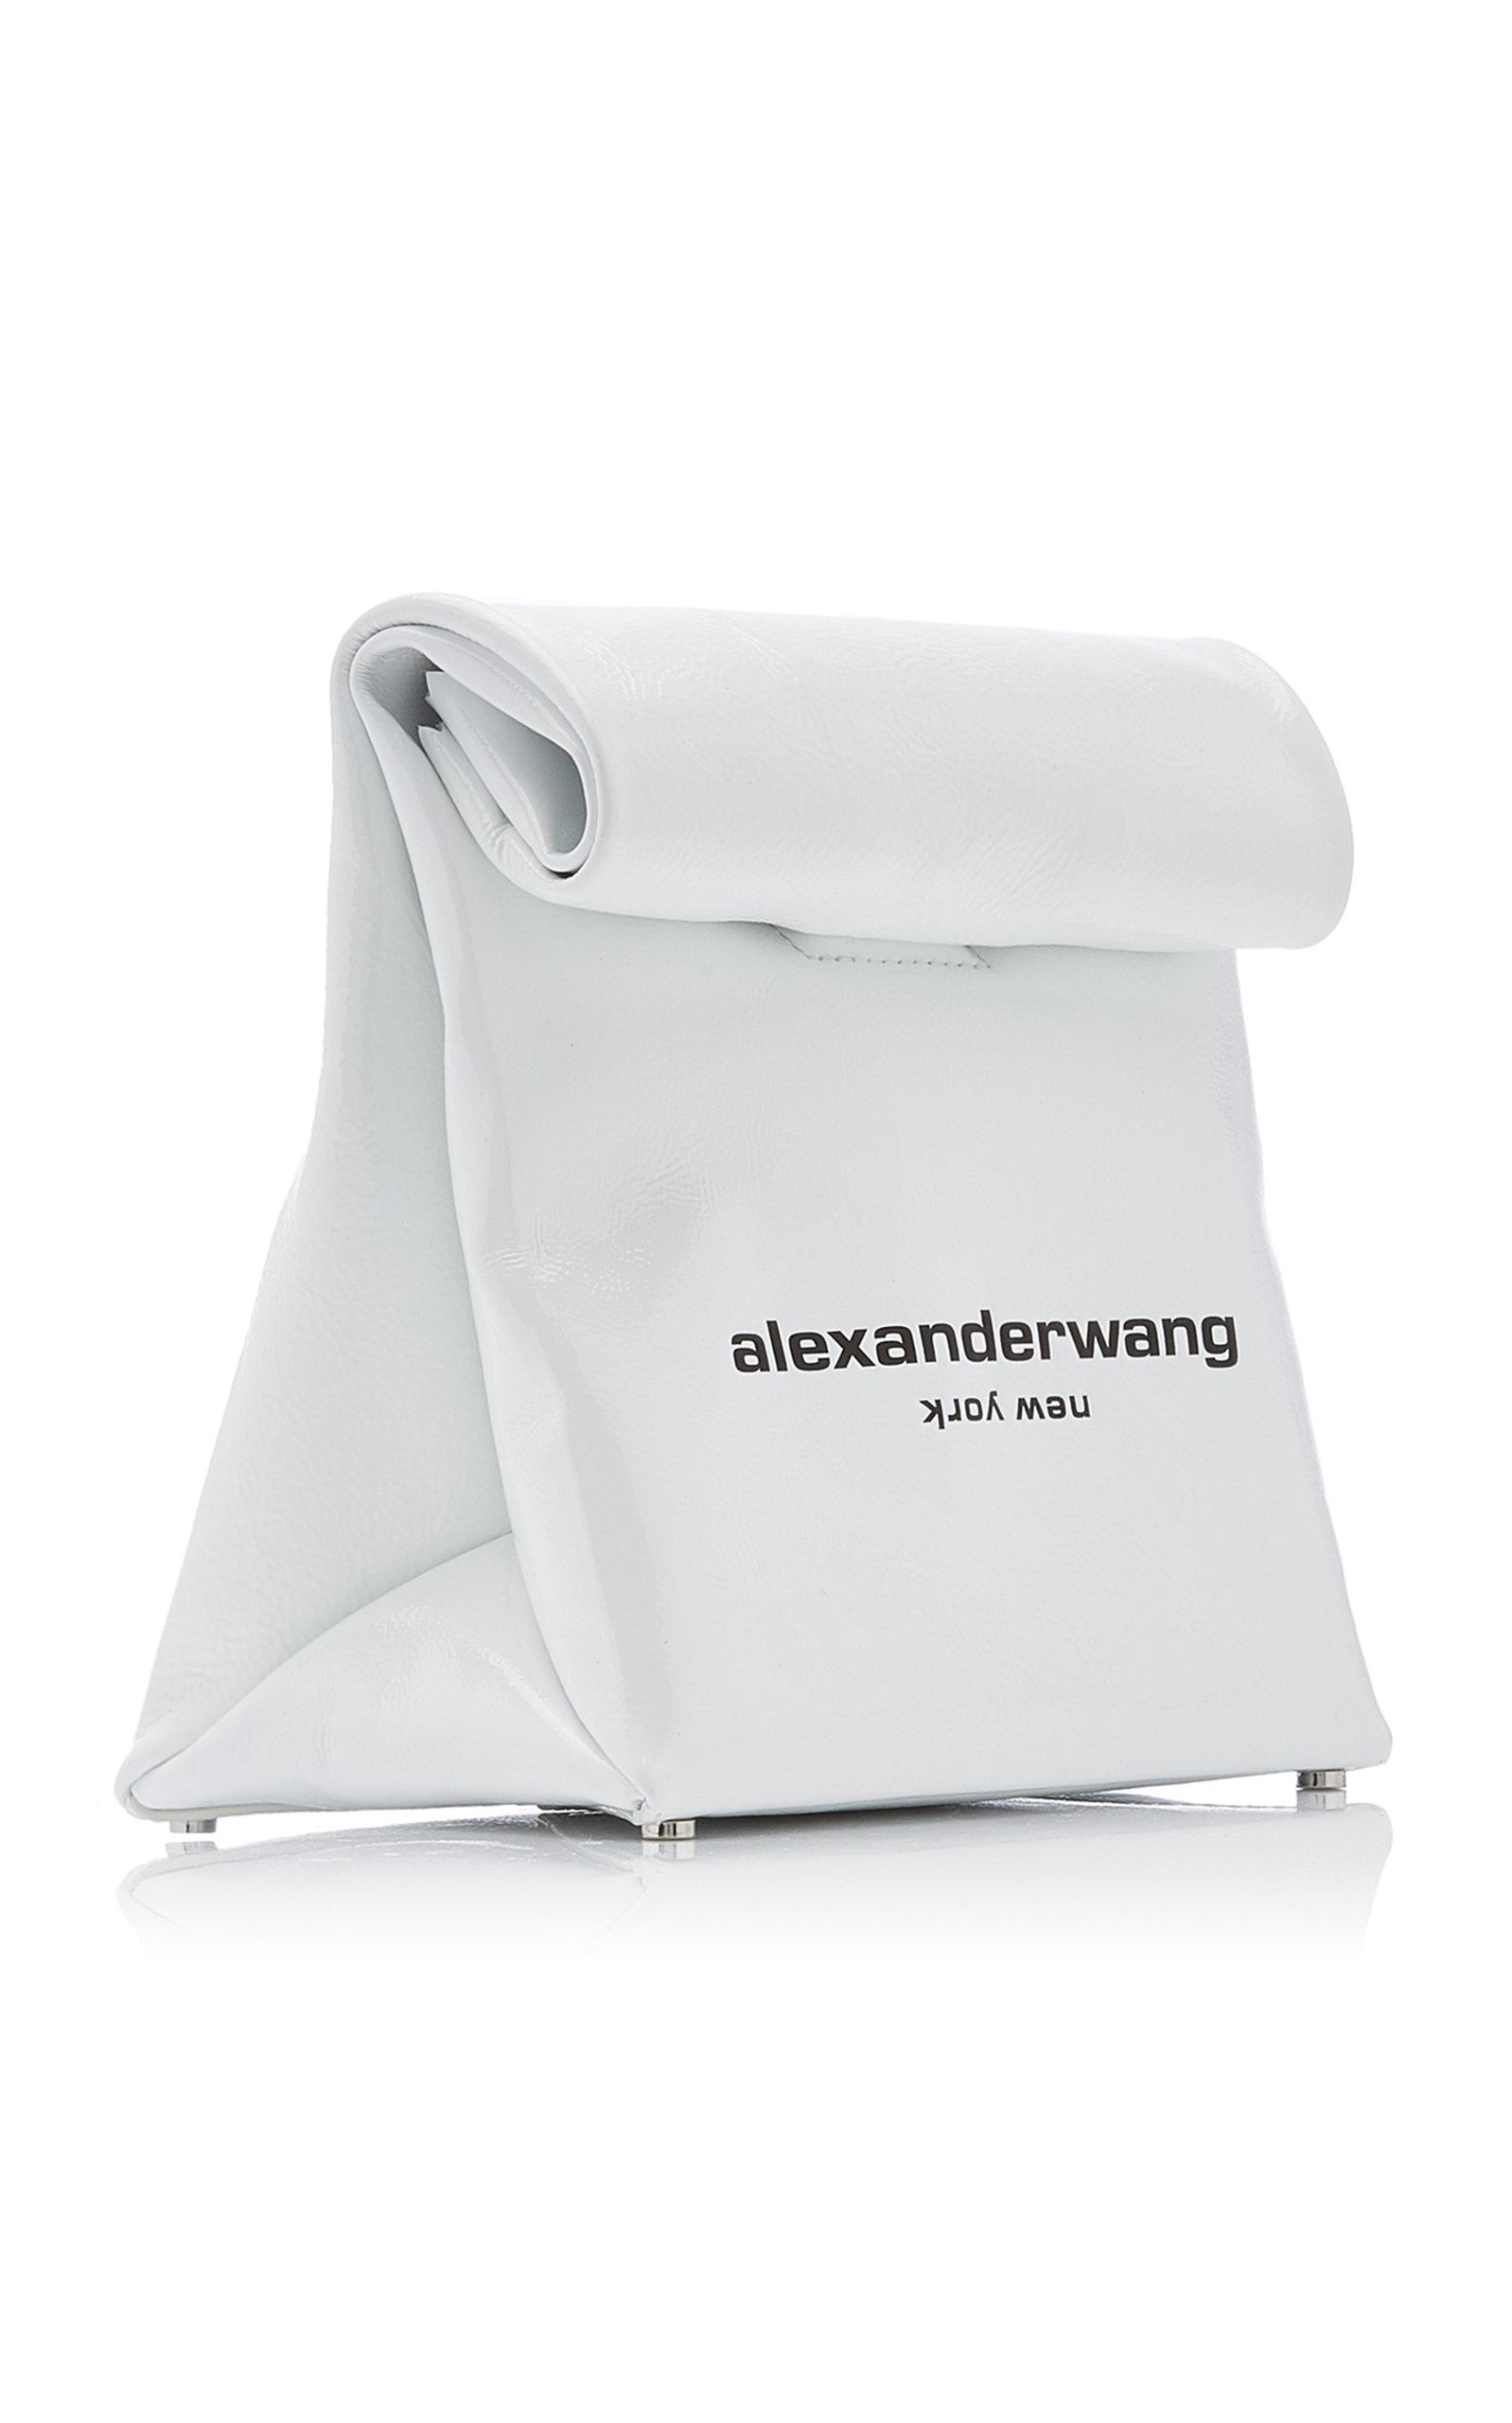 https://cdna.lystit.com/photos/modaoperandi/303bd945/alexander-wang-white-Lunch-Bag-Patent-Leather-Clutch.jpeg